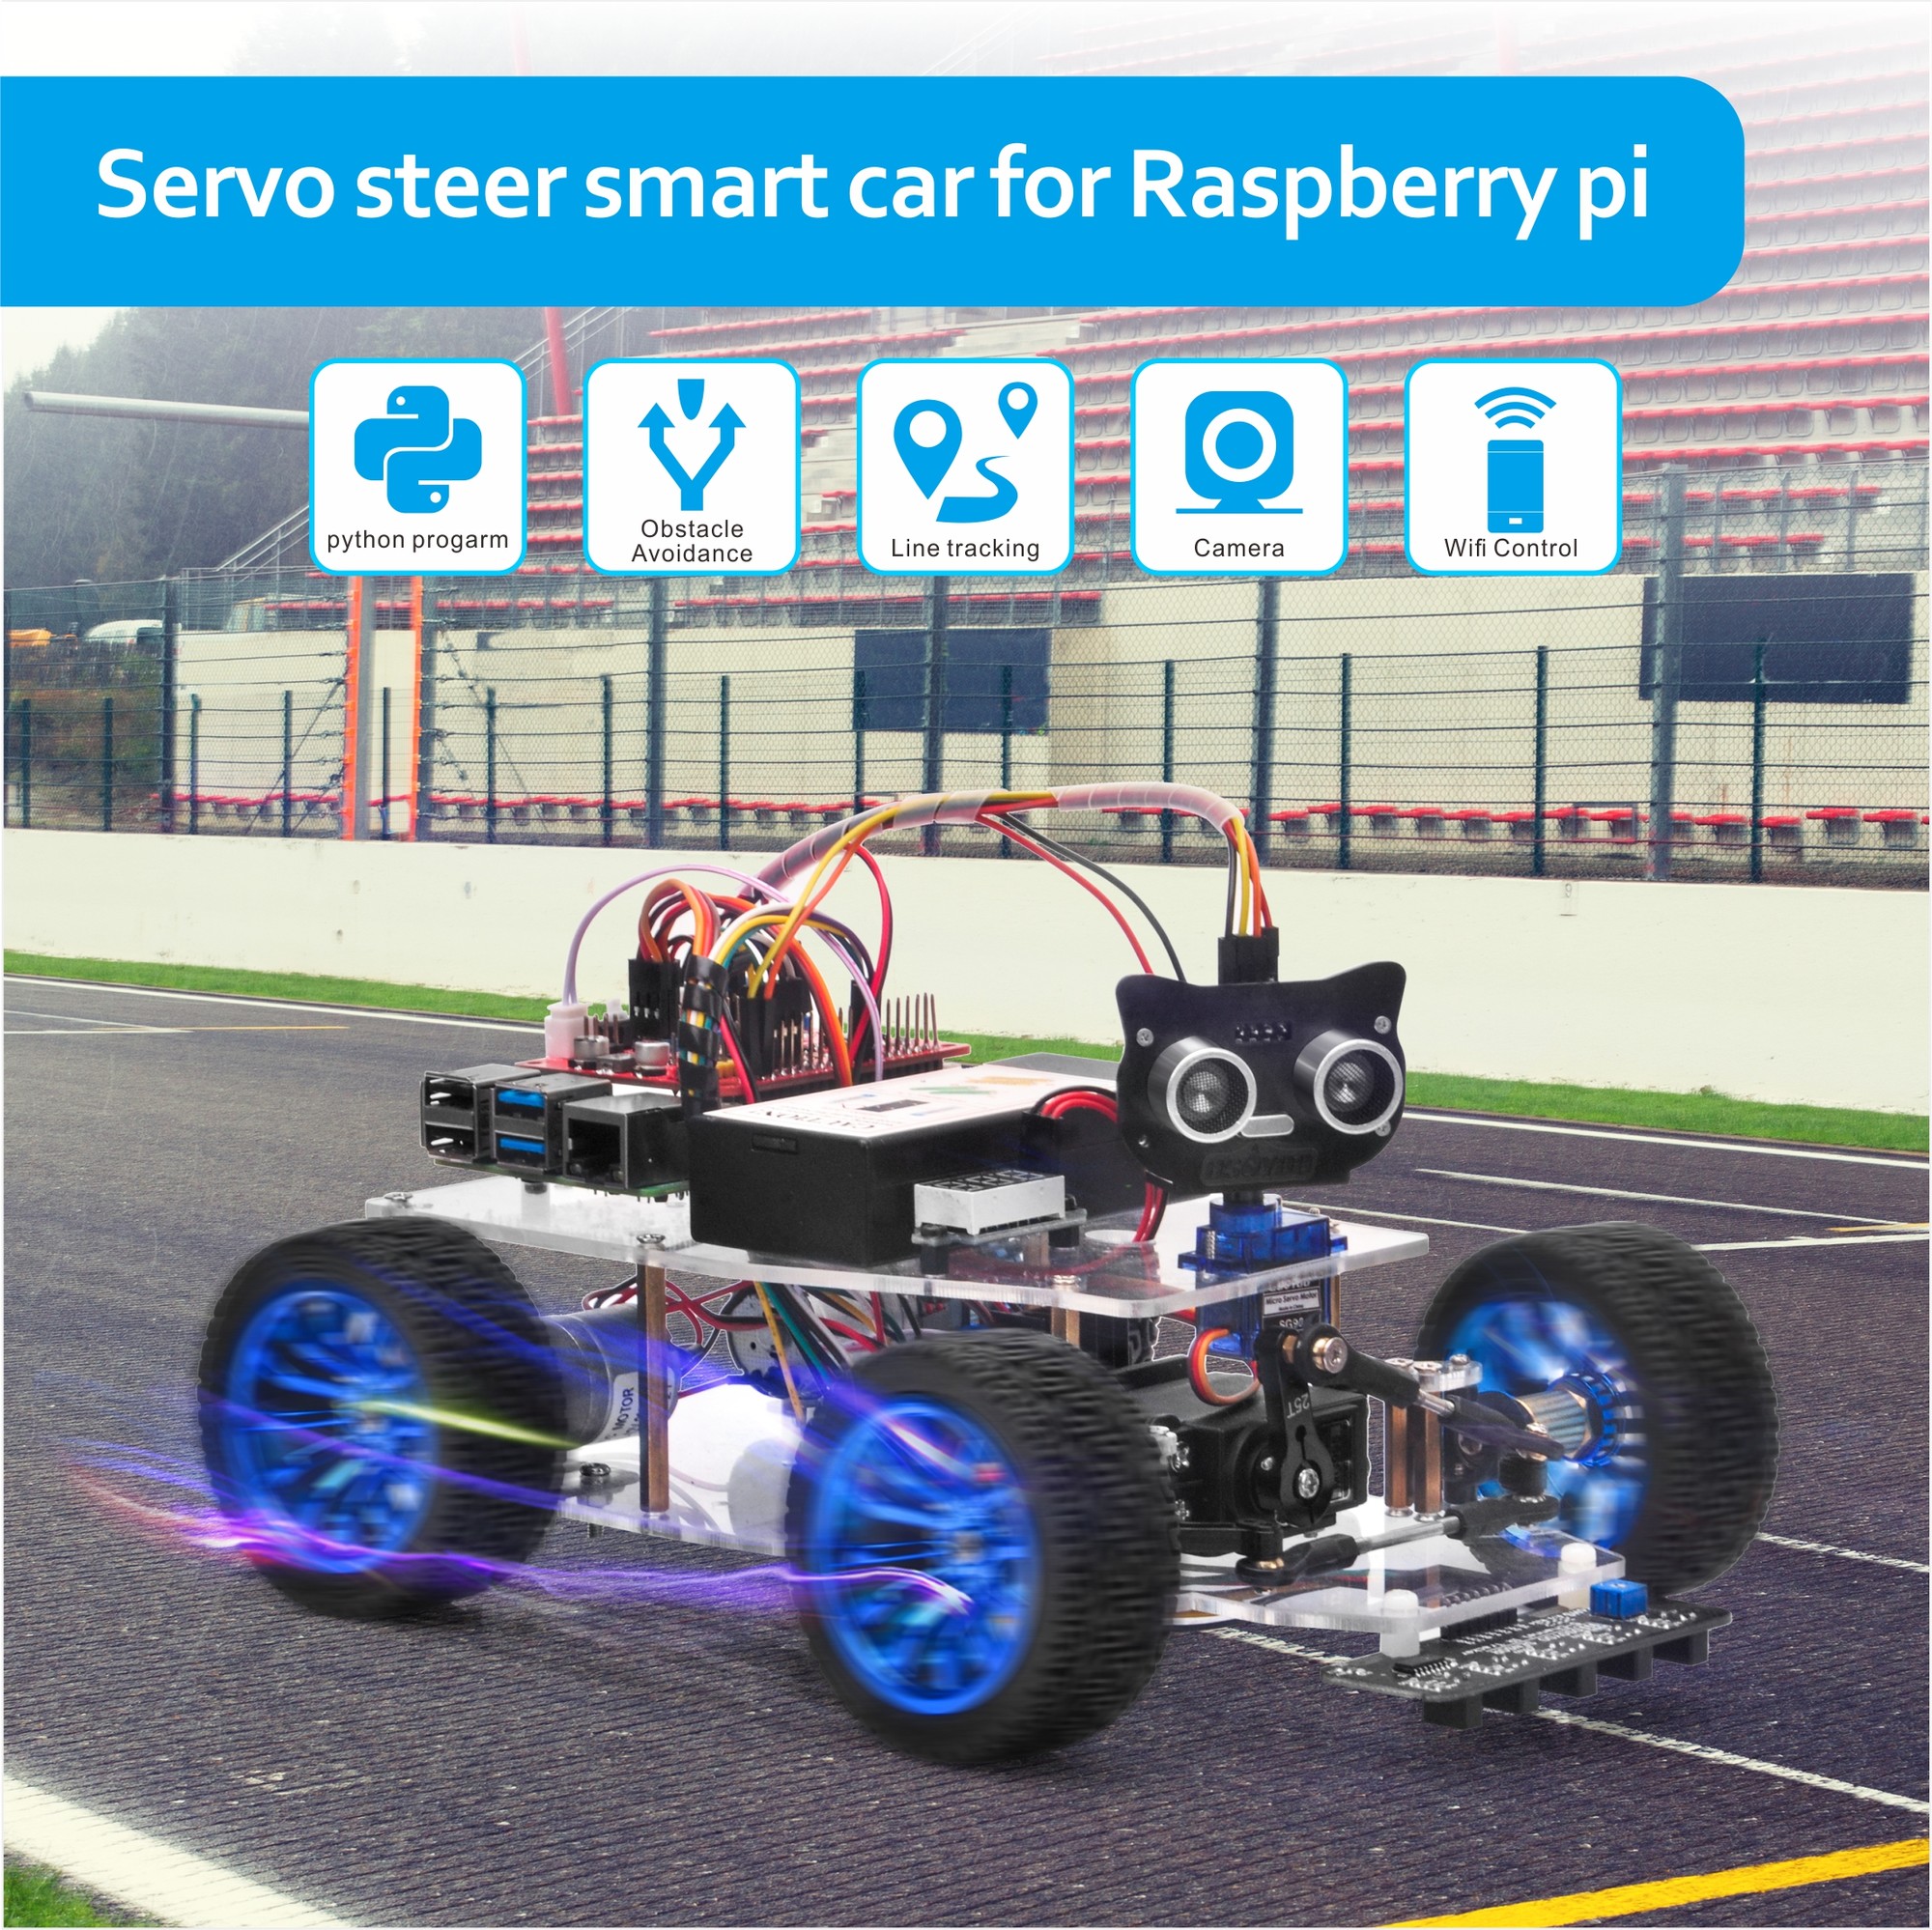 OSOYOO Servo Steer Smart Car for Raspberry Pi : Introduction